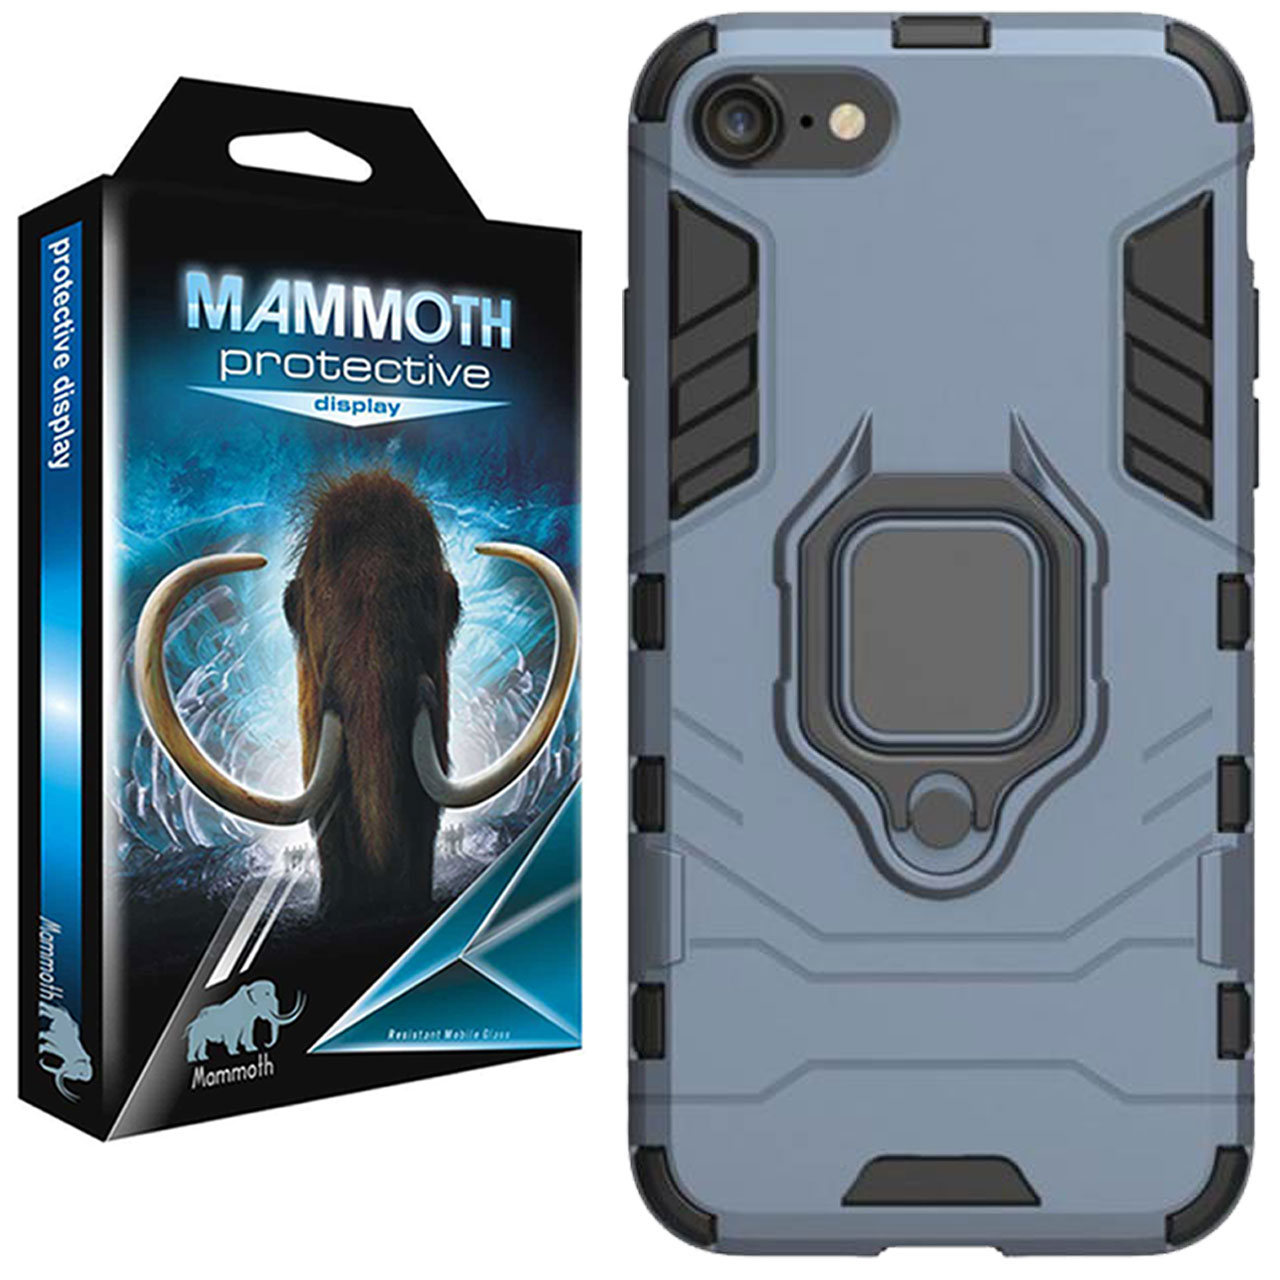 کاور ماموت مدل MMT-GHB-TAK مناسب برای گوشی موبایل اپل Iphone 6/6S